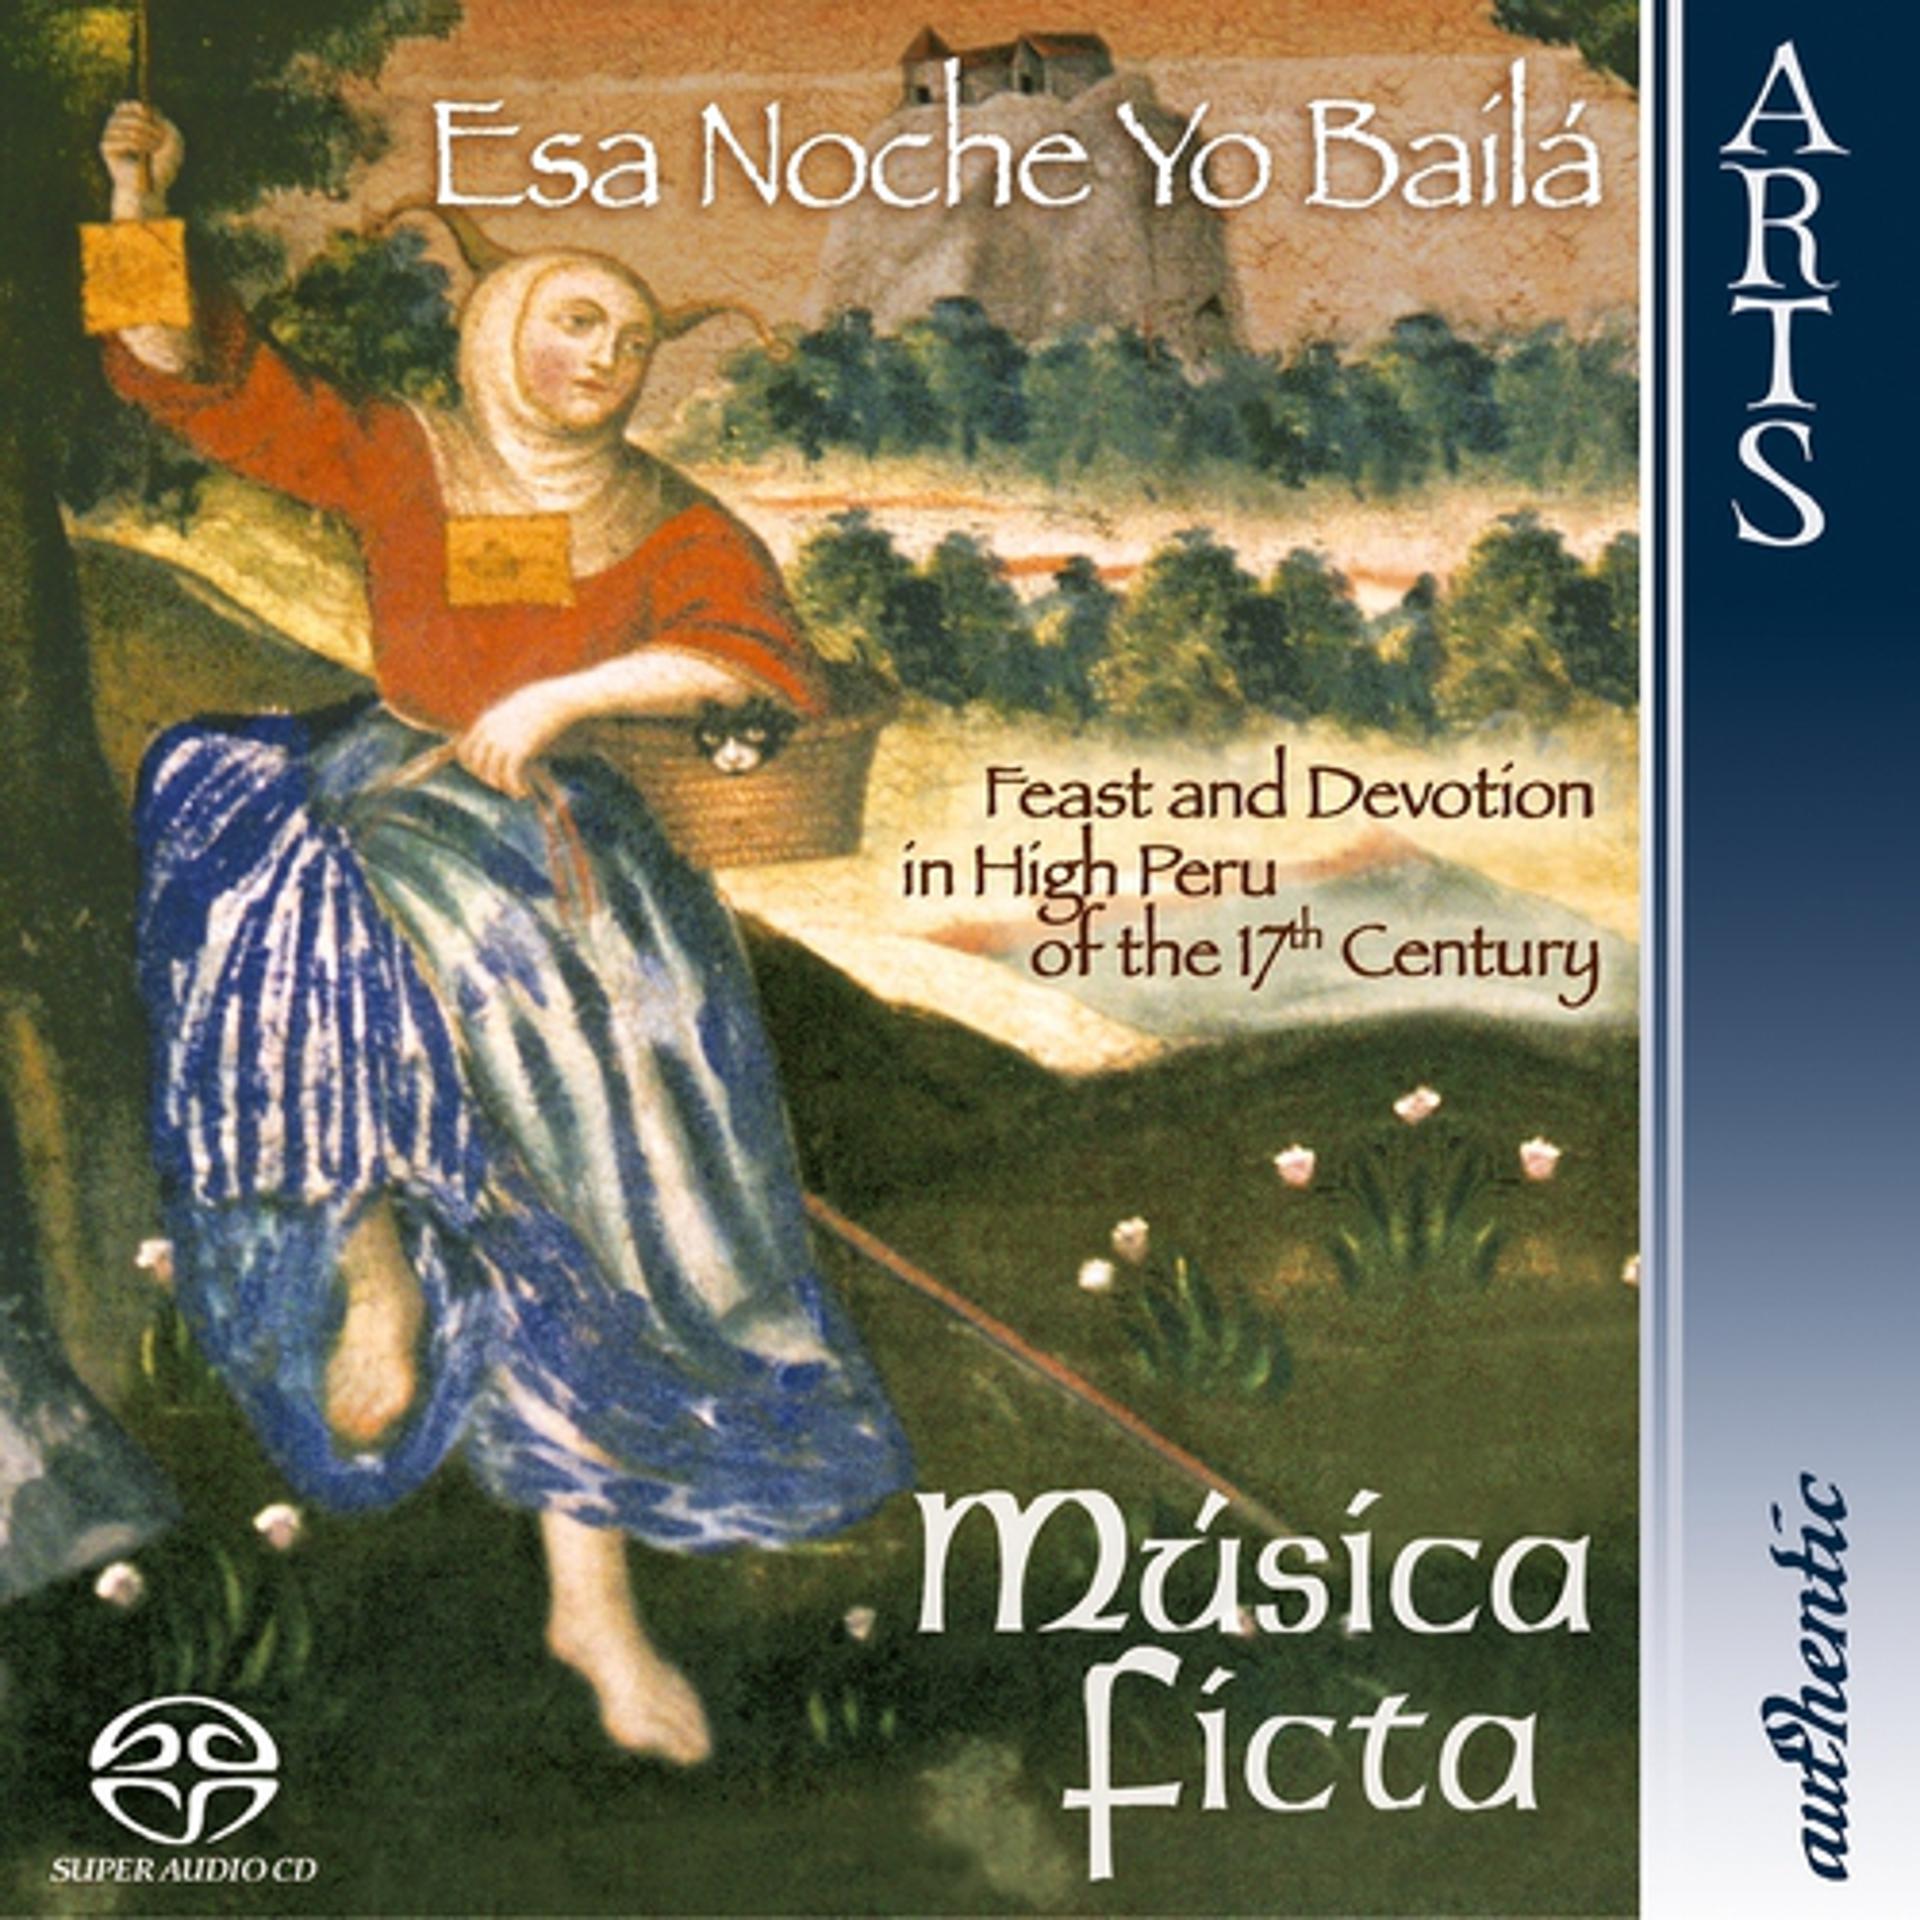 Постер альбома "Esa Noche Yo Baílá", Feast and Devotion in High Peru of the 17th Century